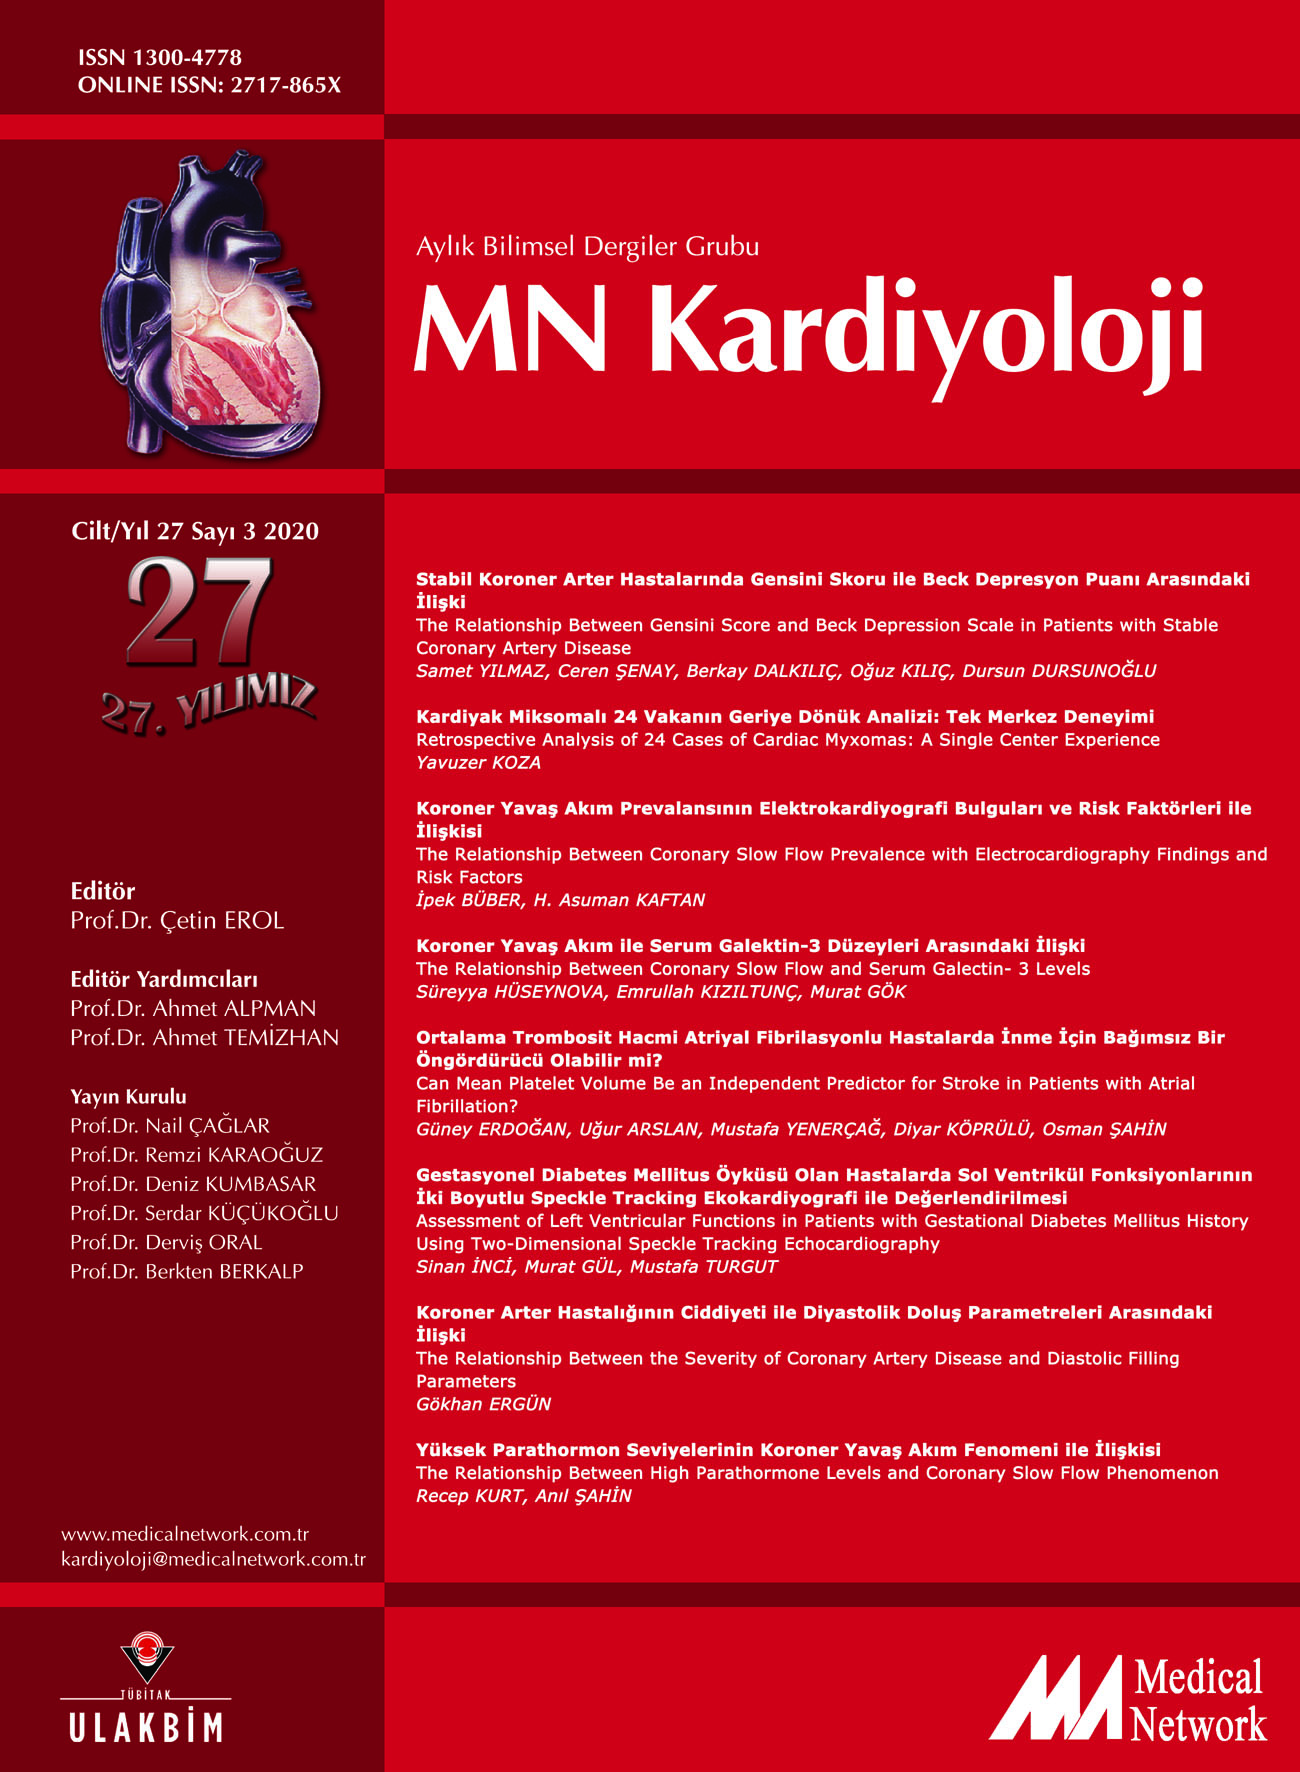 <p>MN Kardiyoloji Cilt: 27 Say: 3 2020 MN Cardiology Volume: 27 No: 3 2020</p>